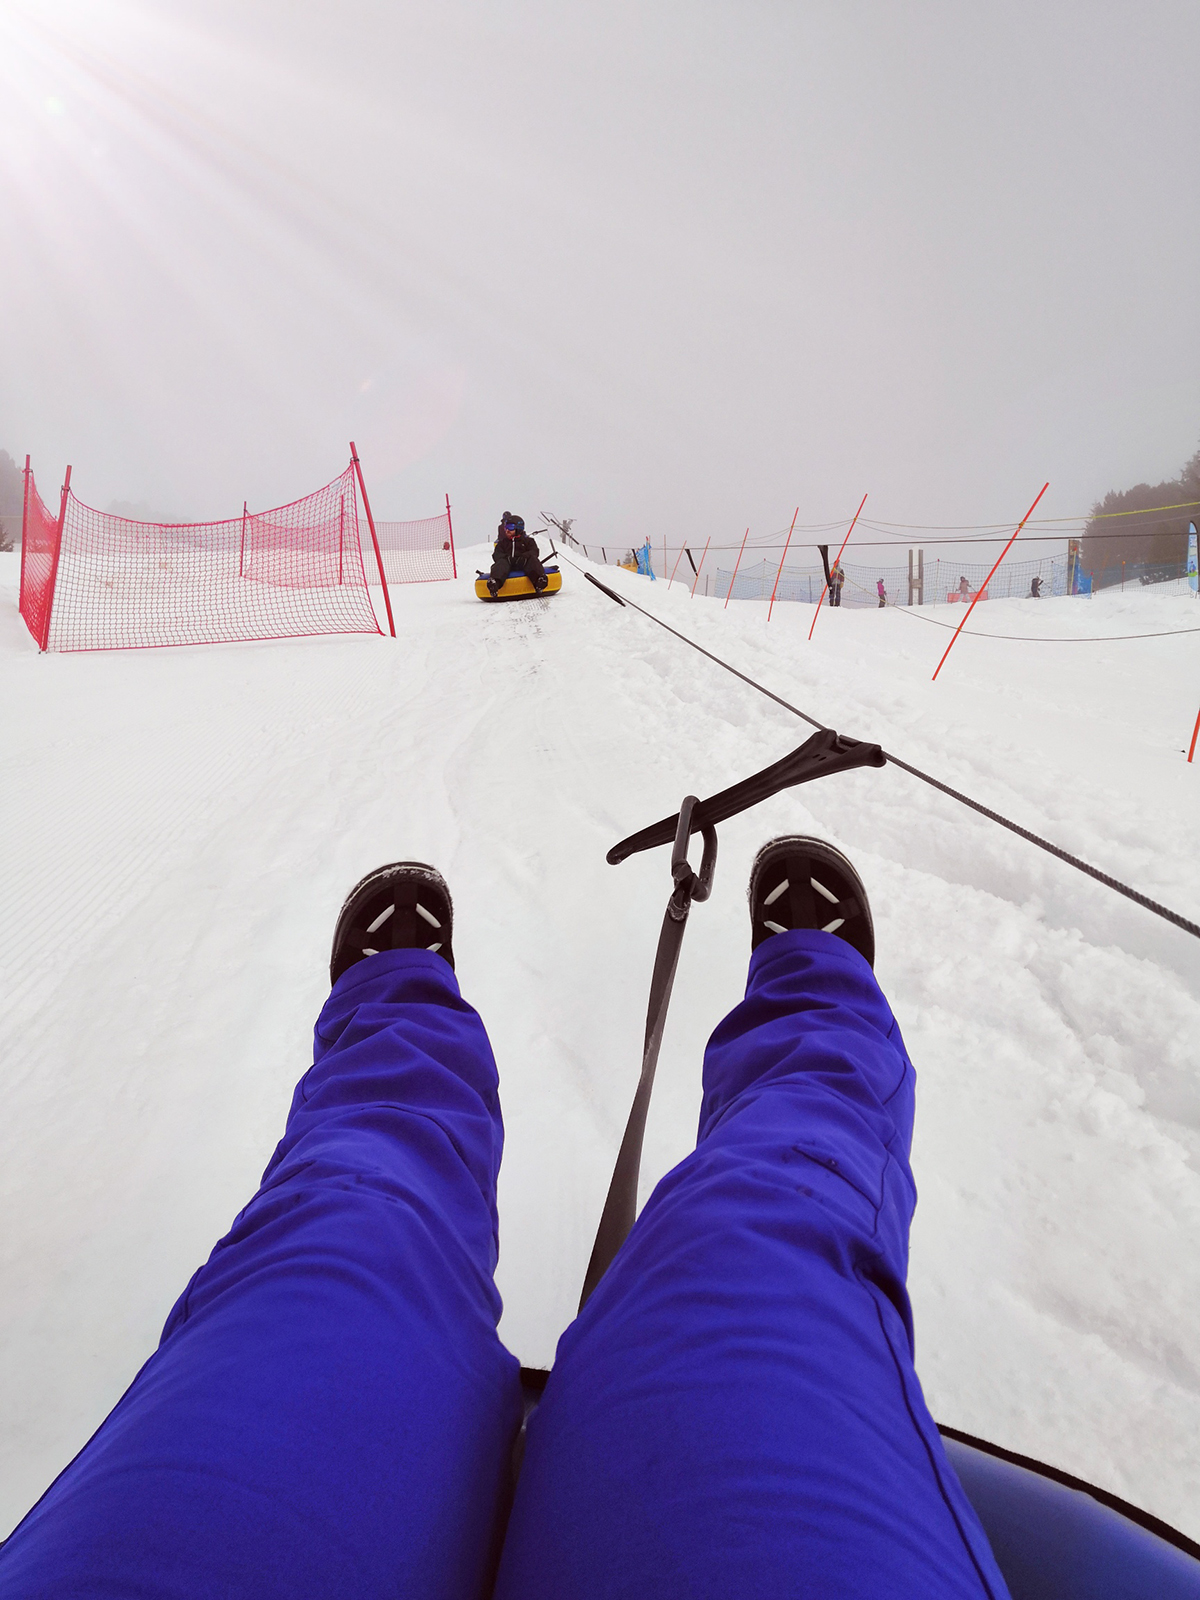 Chamrousse blog expérience test snowtubing tube park fil montée bouée neige station ski montagne isère alpes france - © EM - OT Chamrousse